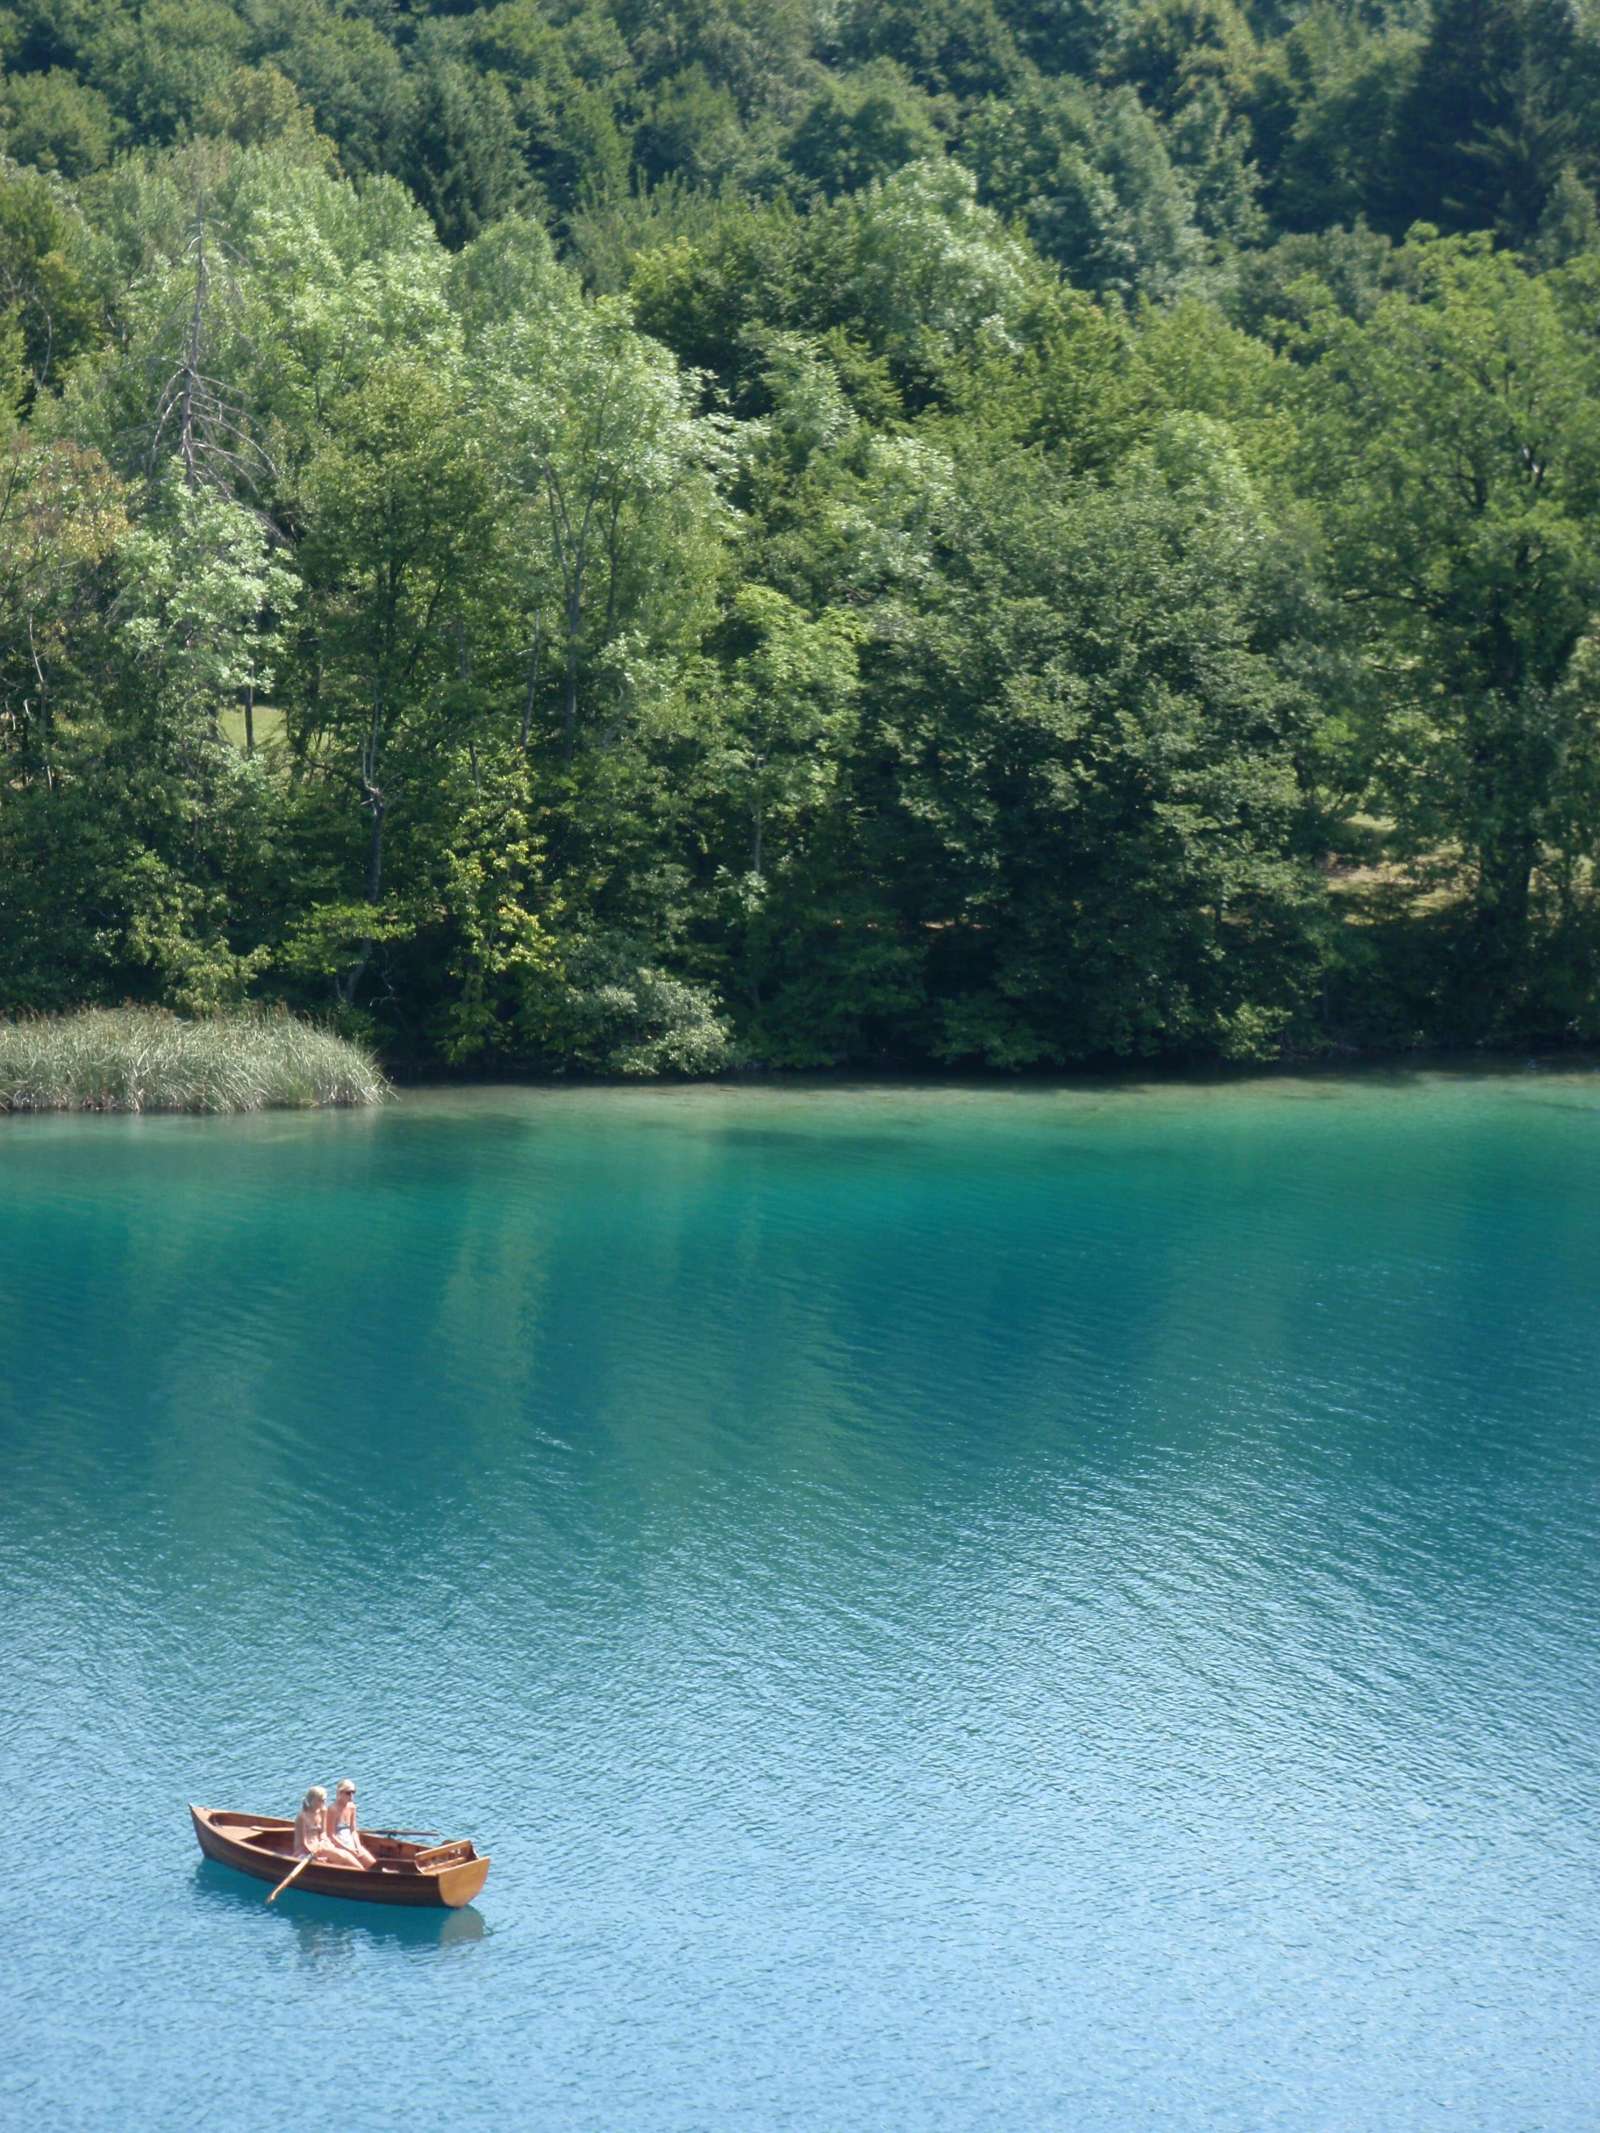 The Plitvice Lakes in northern Croatia